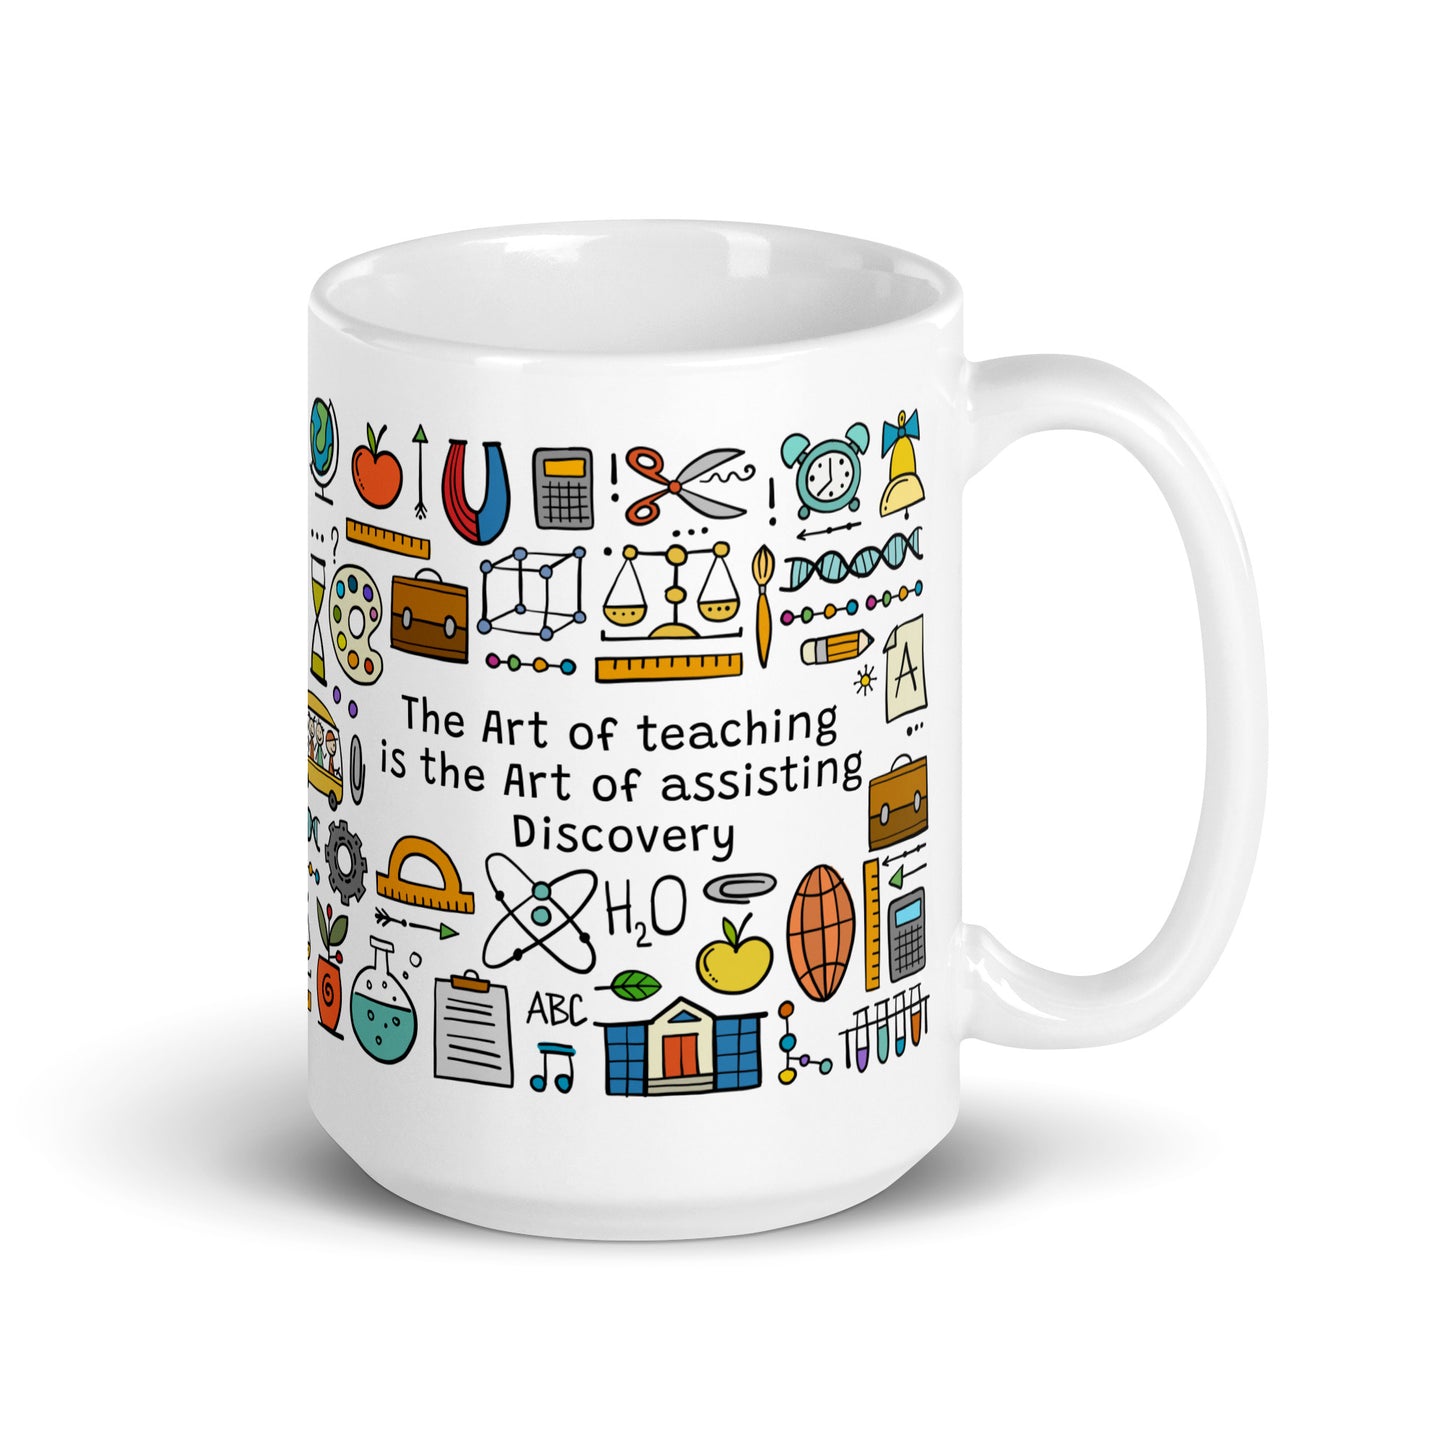 Personalized Ceramic Mug 15oz with full print School thematic